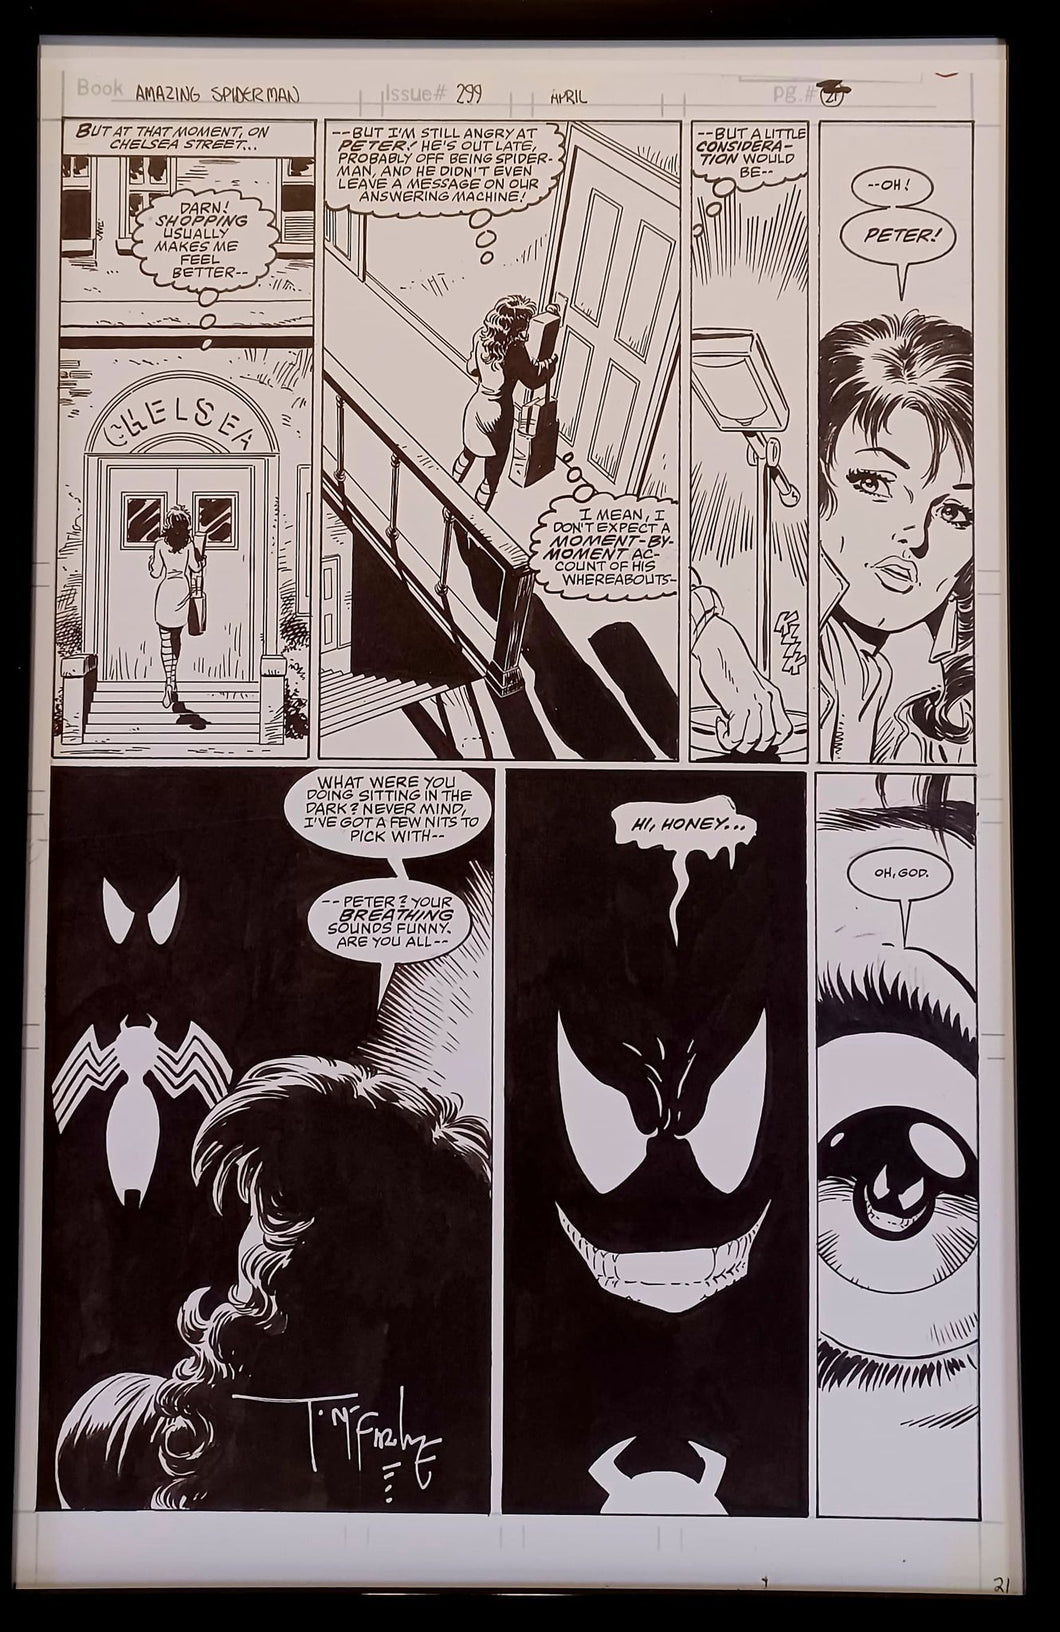 Amazing Spider-Man #299 pg. 21 by Todd McFarlane 11x17 FRAMED Original Art Print Comic Poster